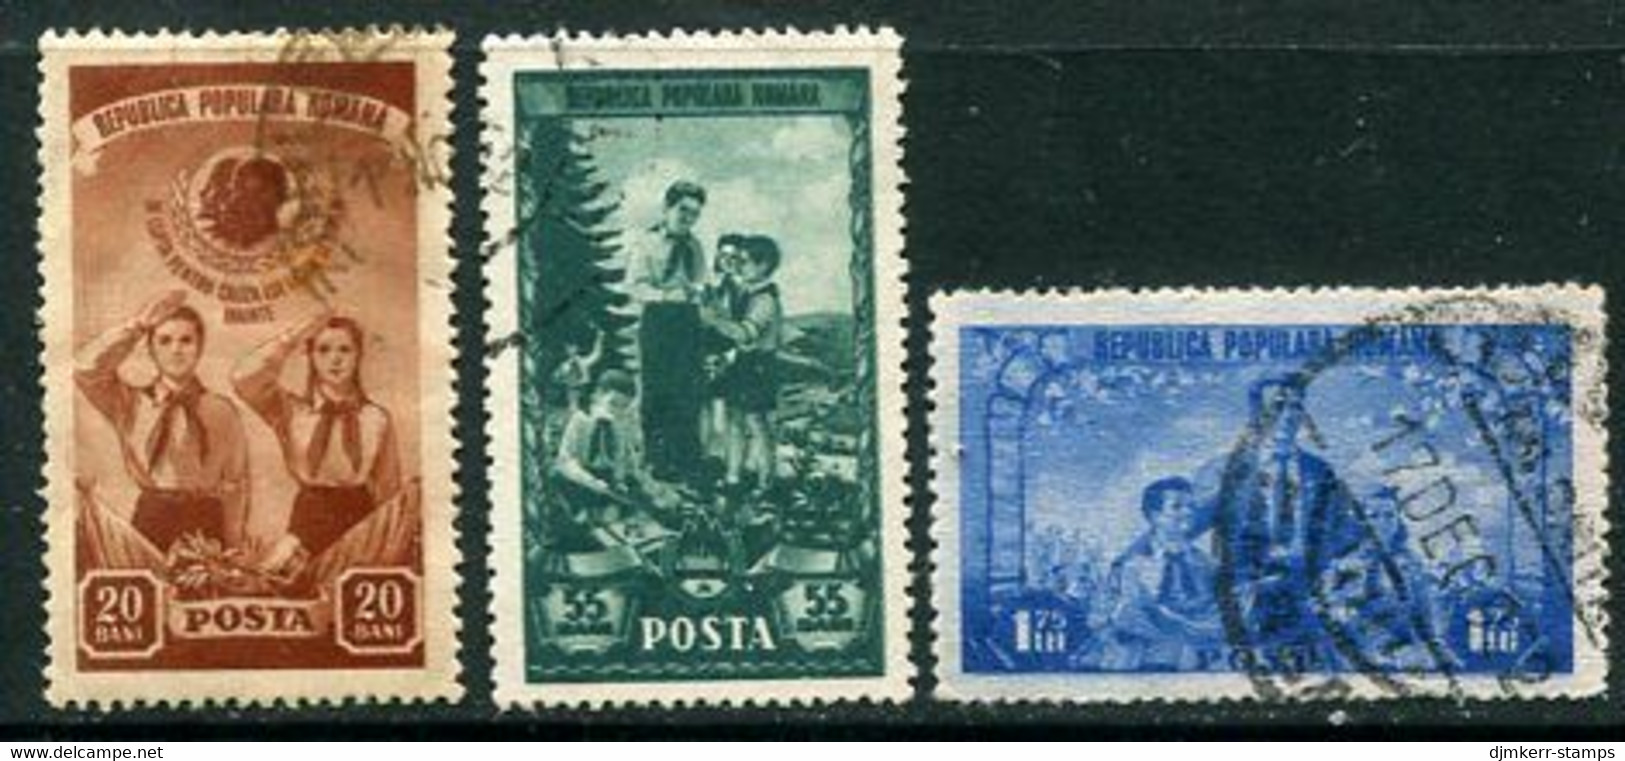 ROMANIA 1952 Pioneer Organisation Used  Michel 1396-98 - Used Stamps